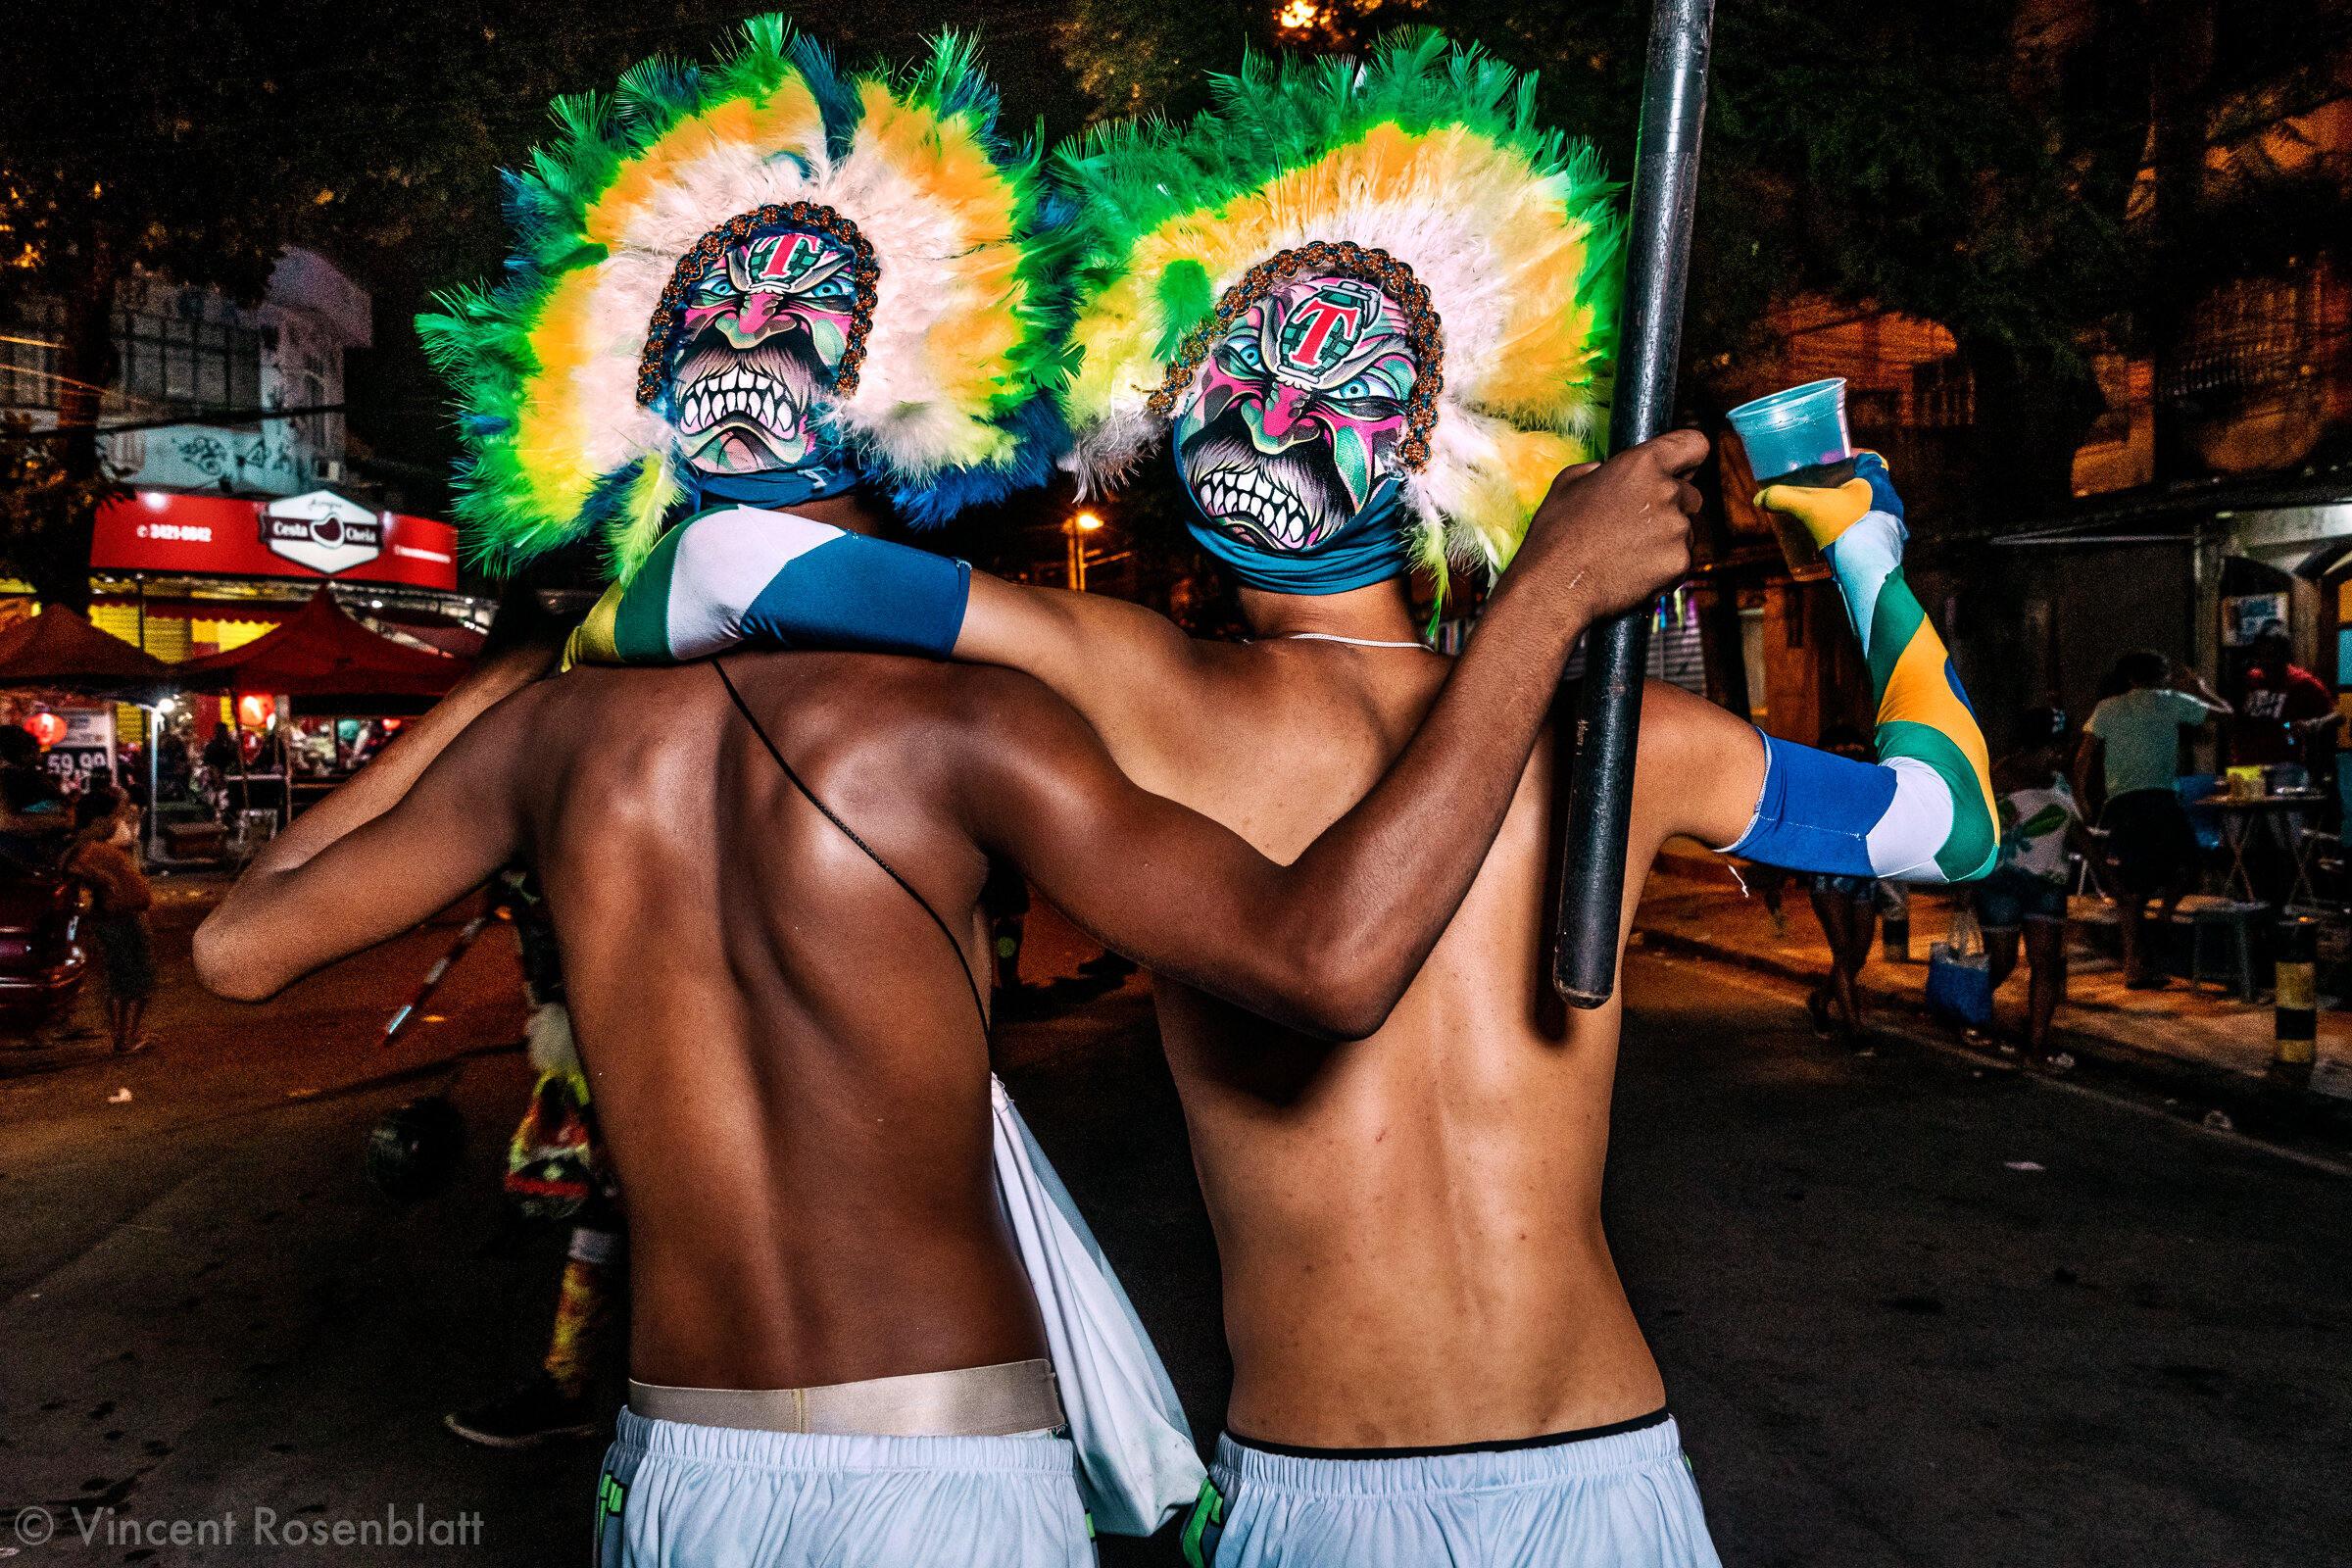  Bate-bola friends in the community Cohab de Realengo, West Zone of Rio de Janeiro, Carnival 2020. 